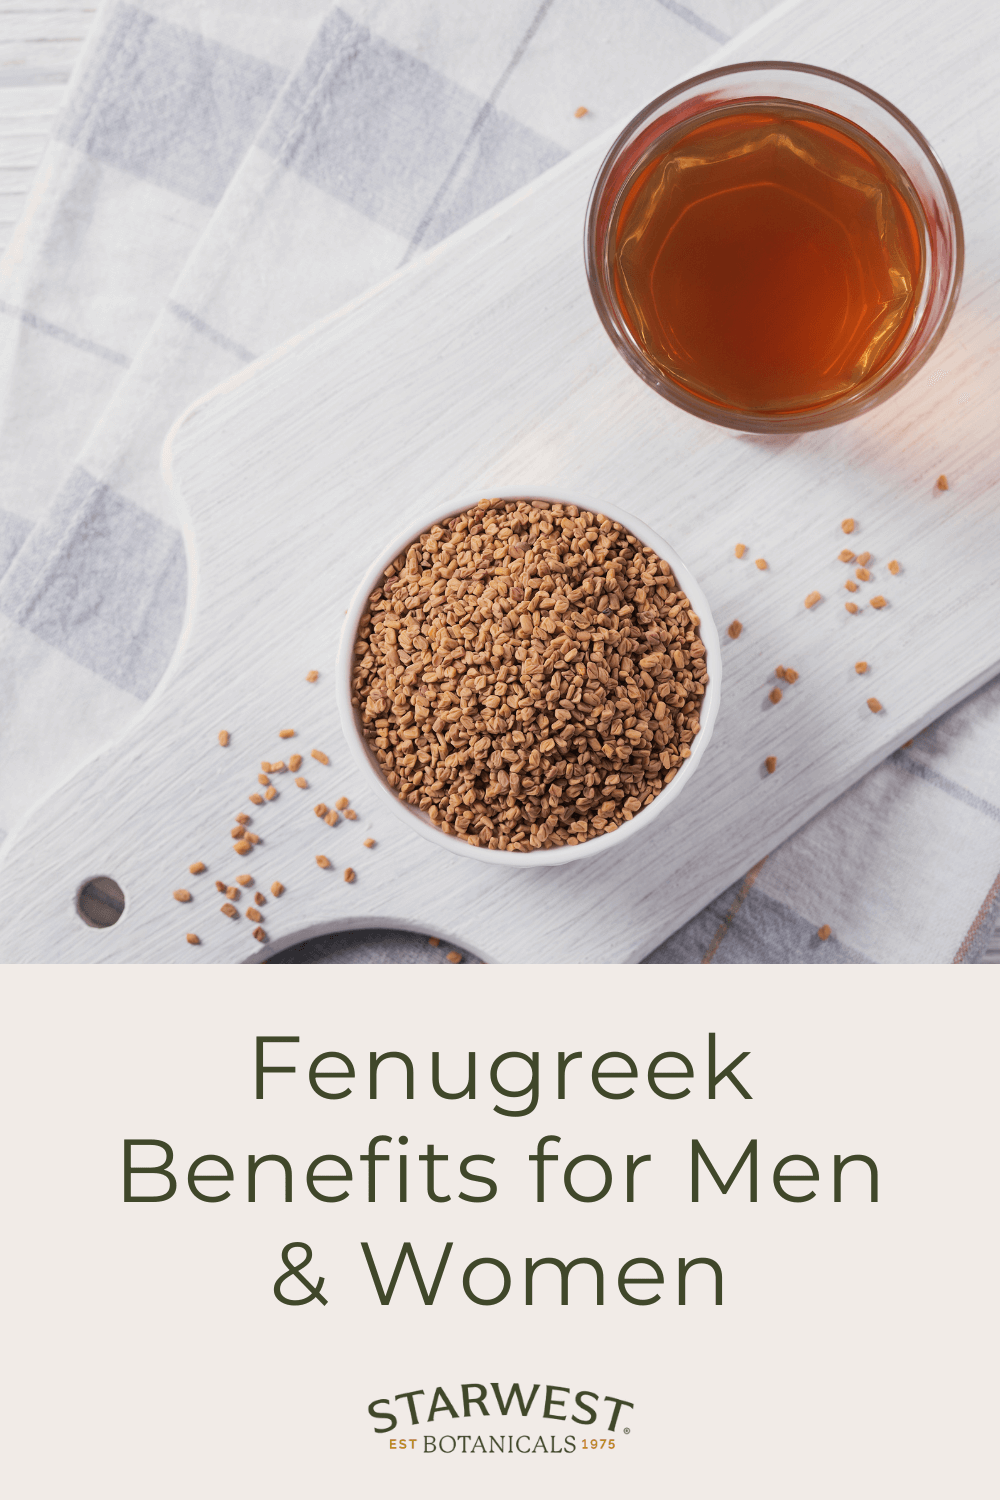 fenugreek-benefits-for-men-and-women-1-.png